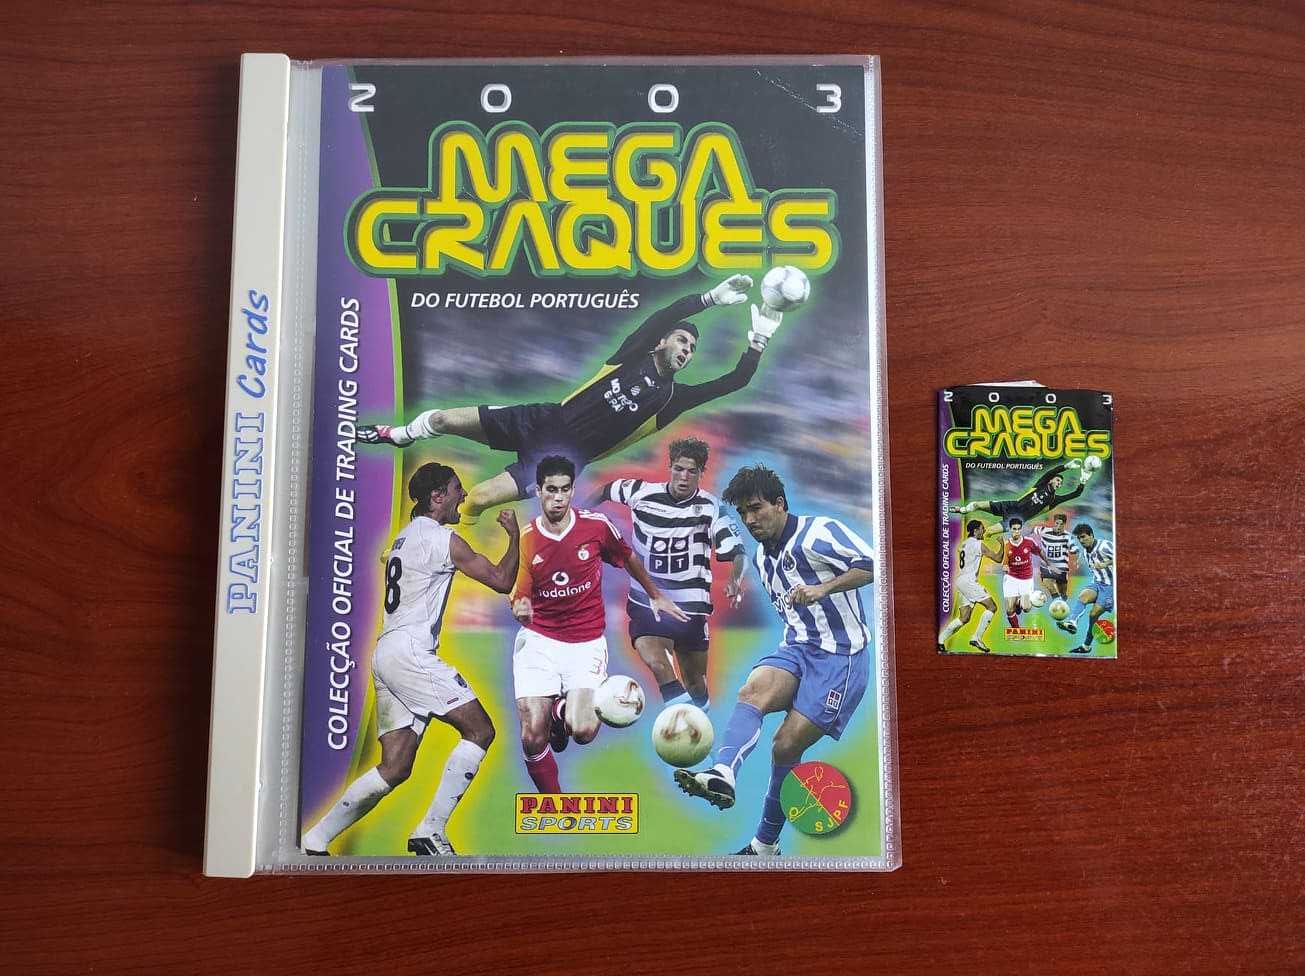 Panini - Mega Craques do Futebol Português 2003 & 2004